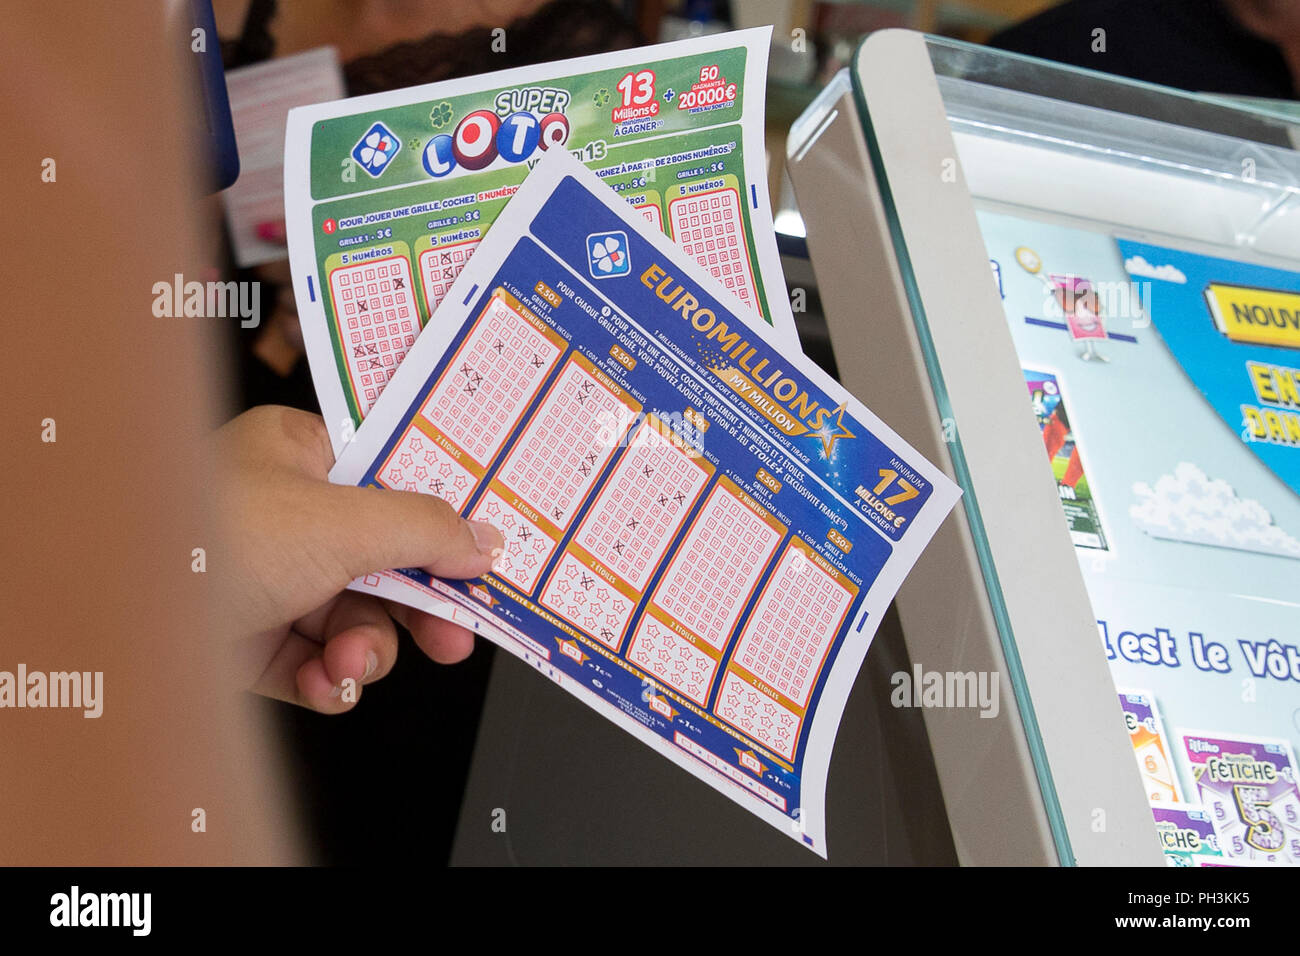 FDJ (French National Lottery operator) Tickets Stockfoto